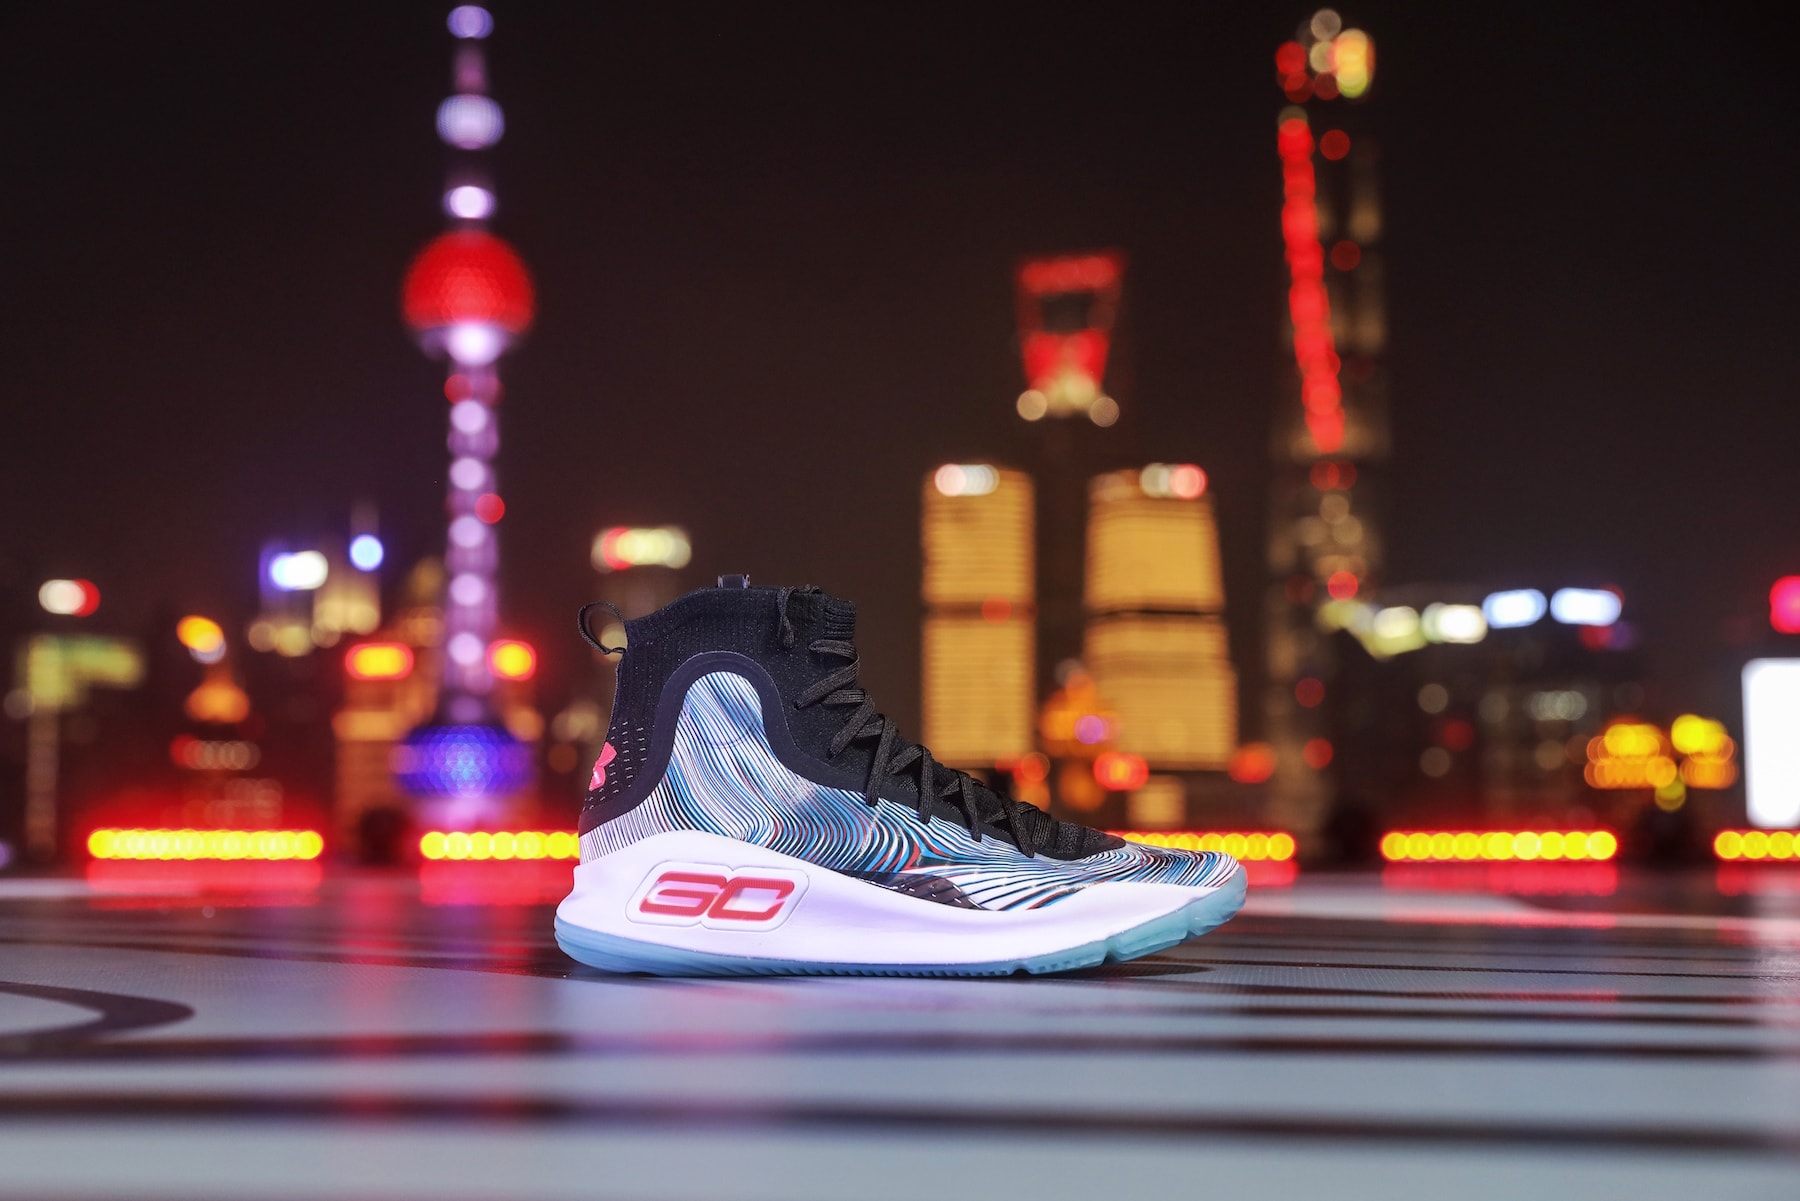 Stephen Curry 亮相上海發佈全新簽名球鞋 Under Armour Curry 4 中國配色